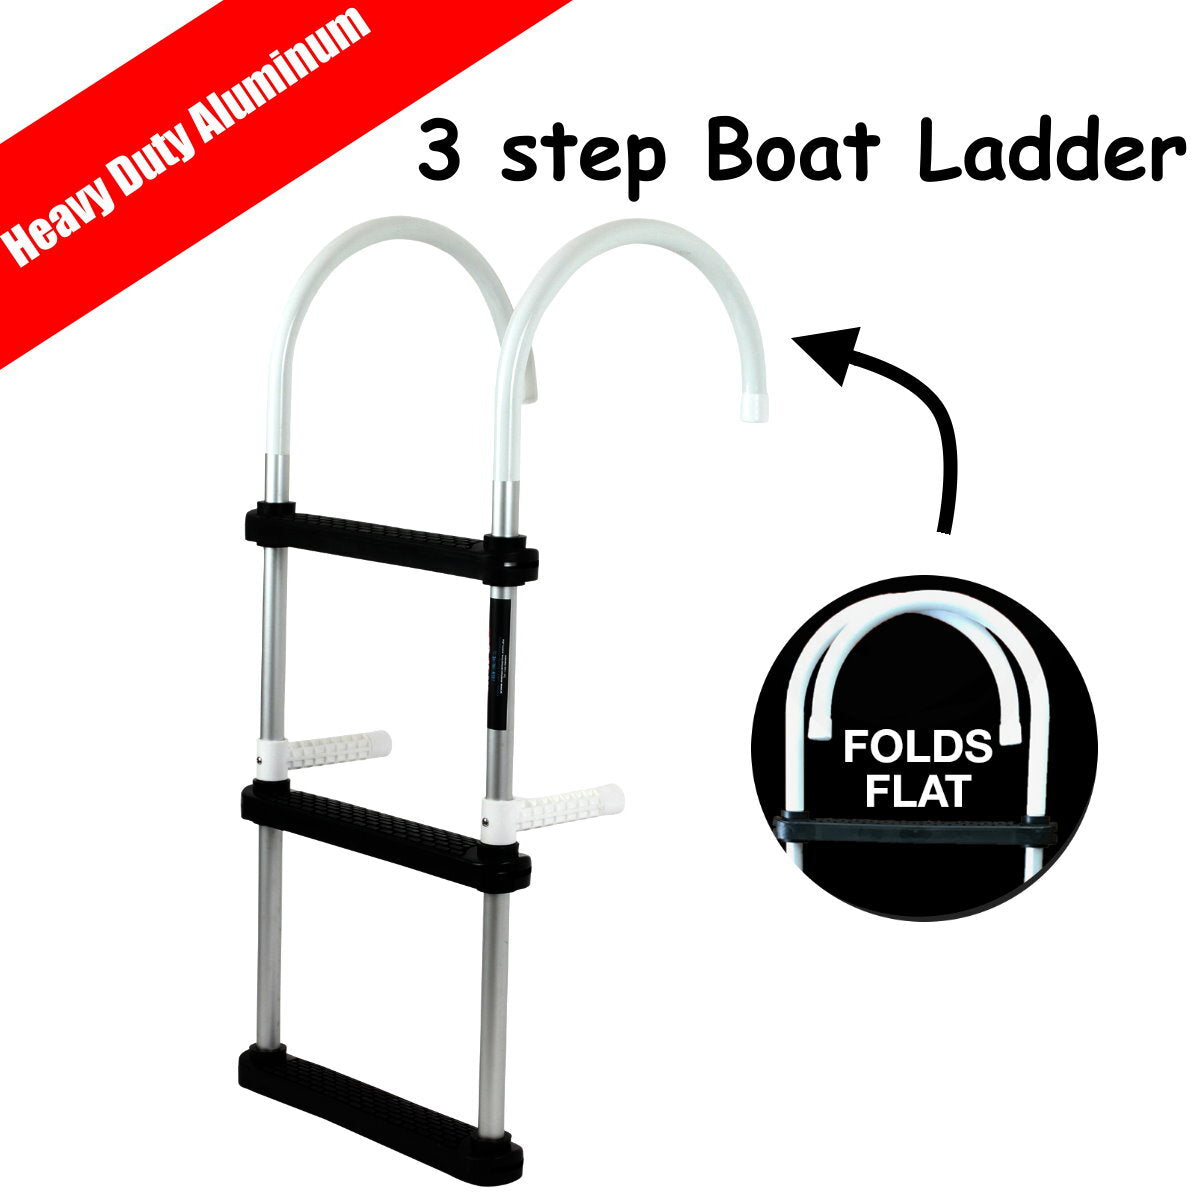 3 Step Heavy Duty Aluminium Boat Ladder with folding hook arms